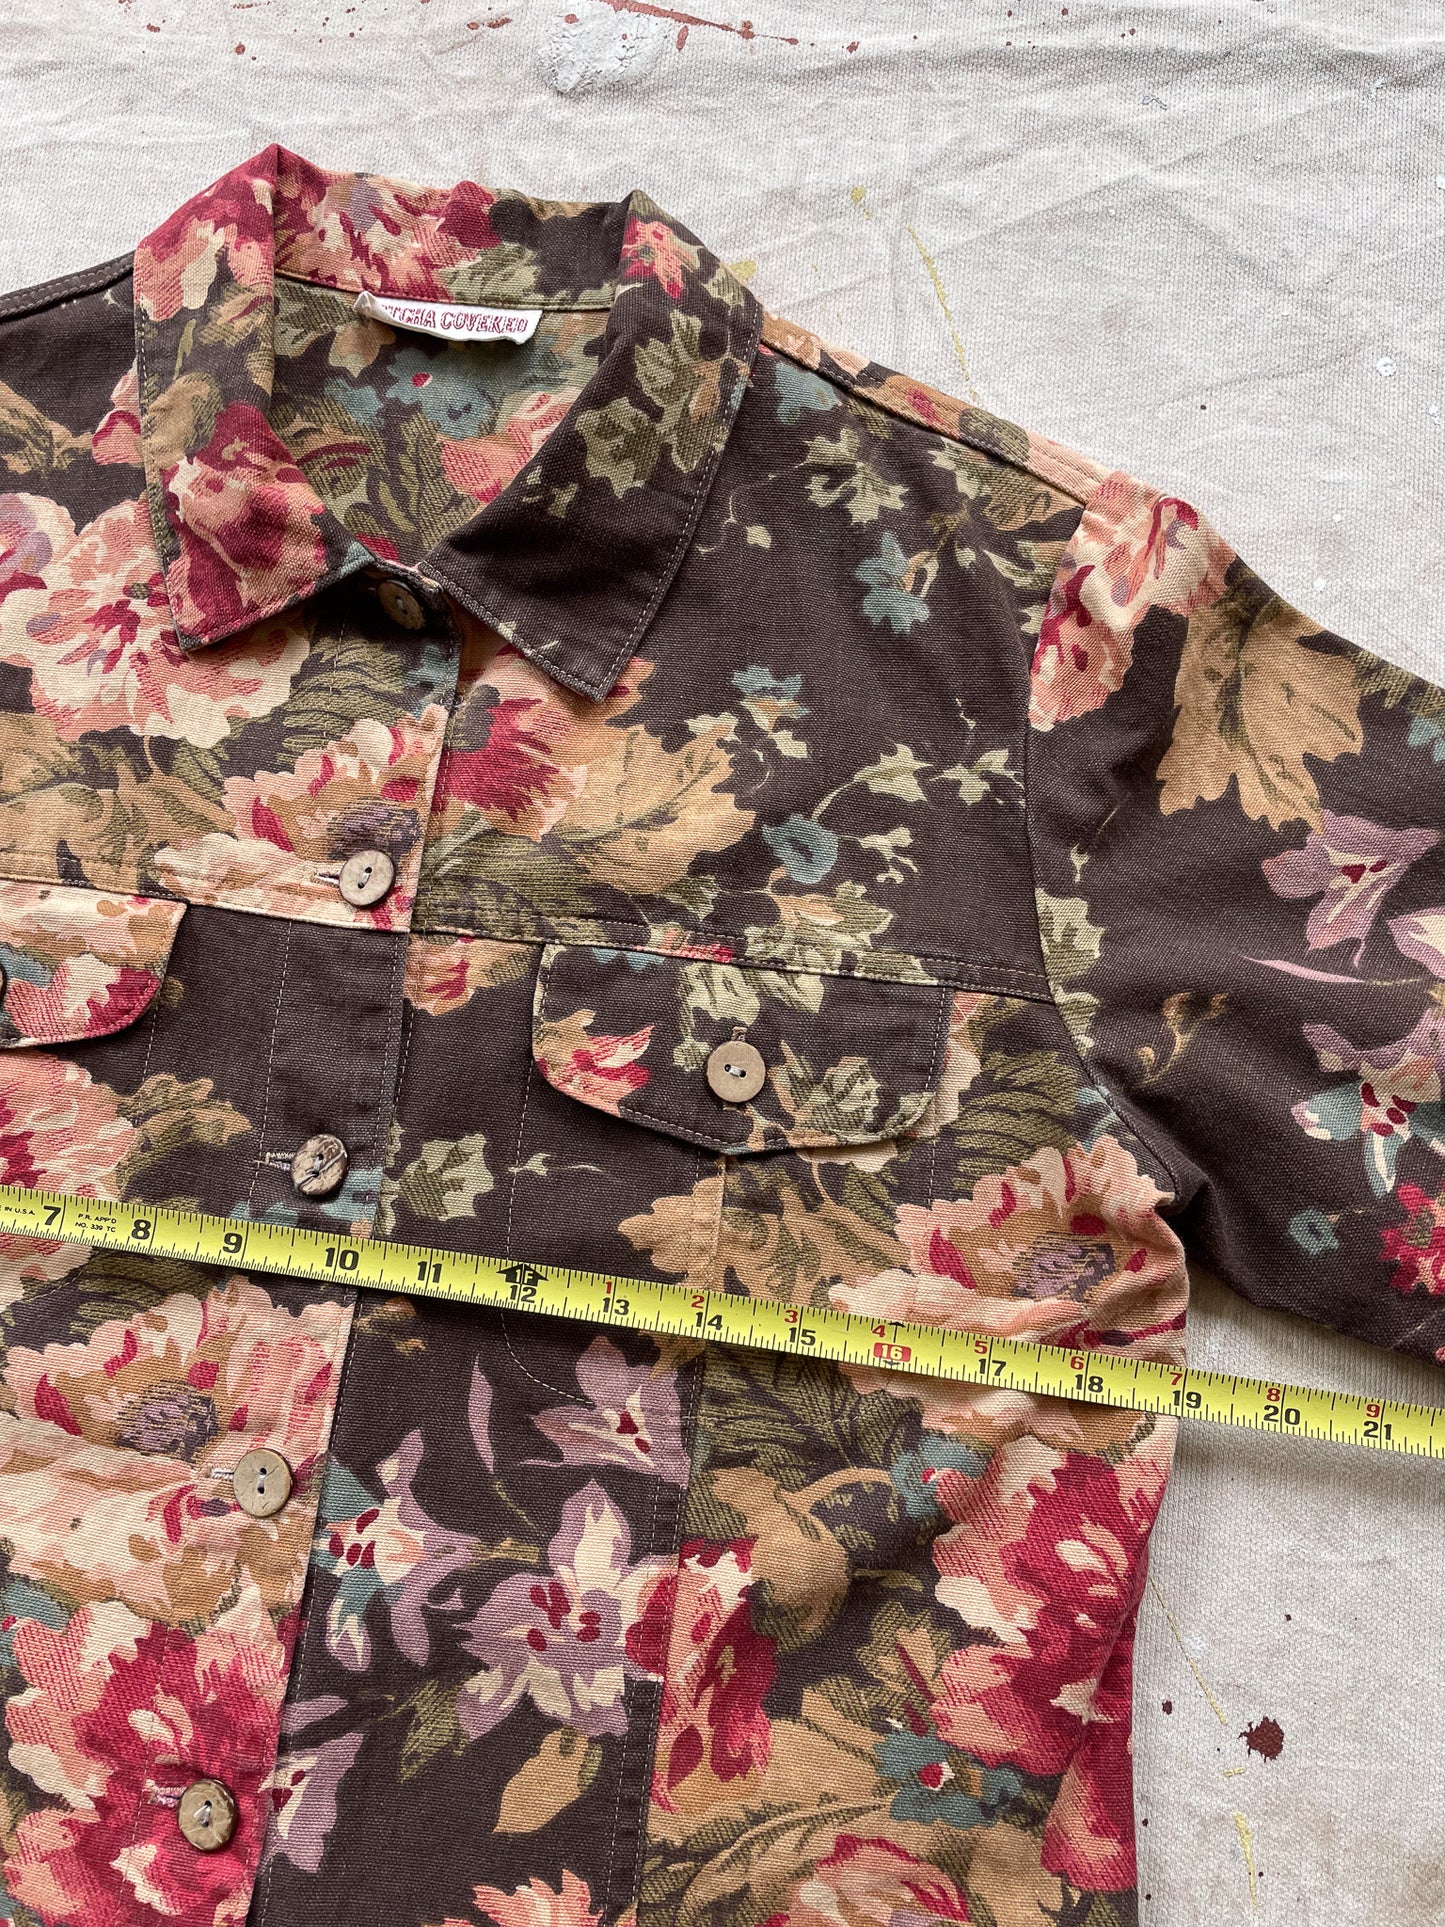 Grandma's Floral Trucker Jacket—[M]